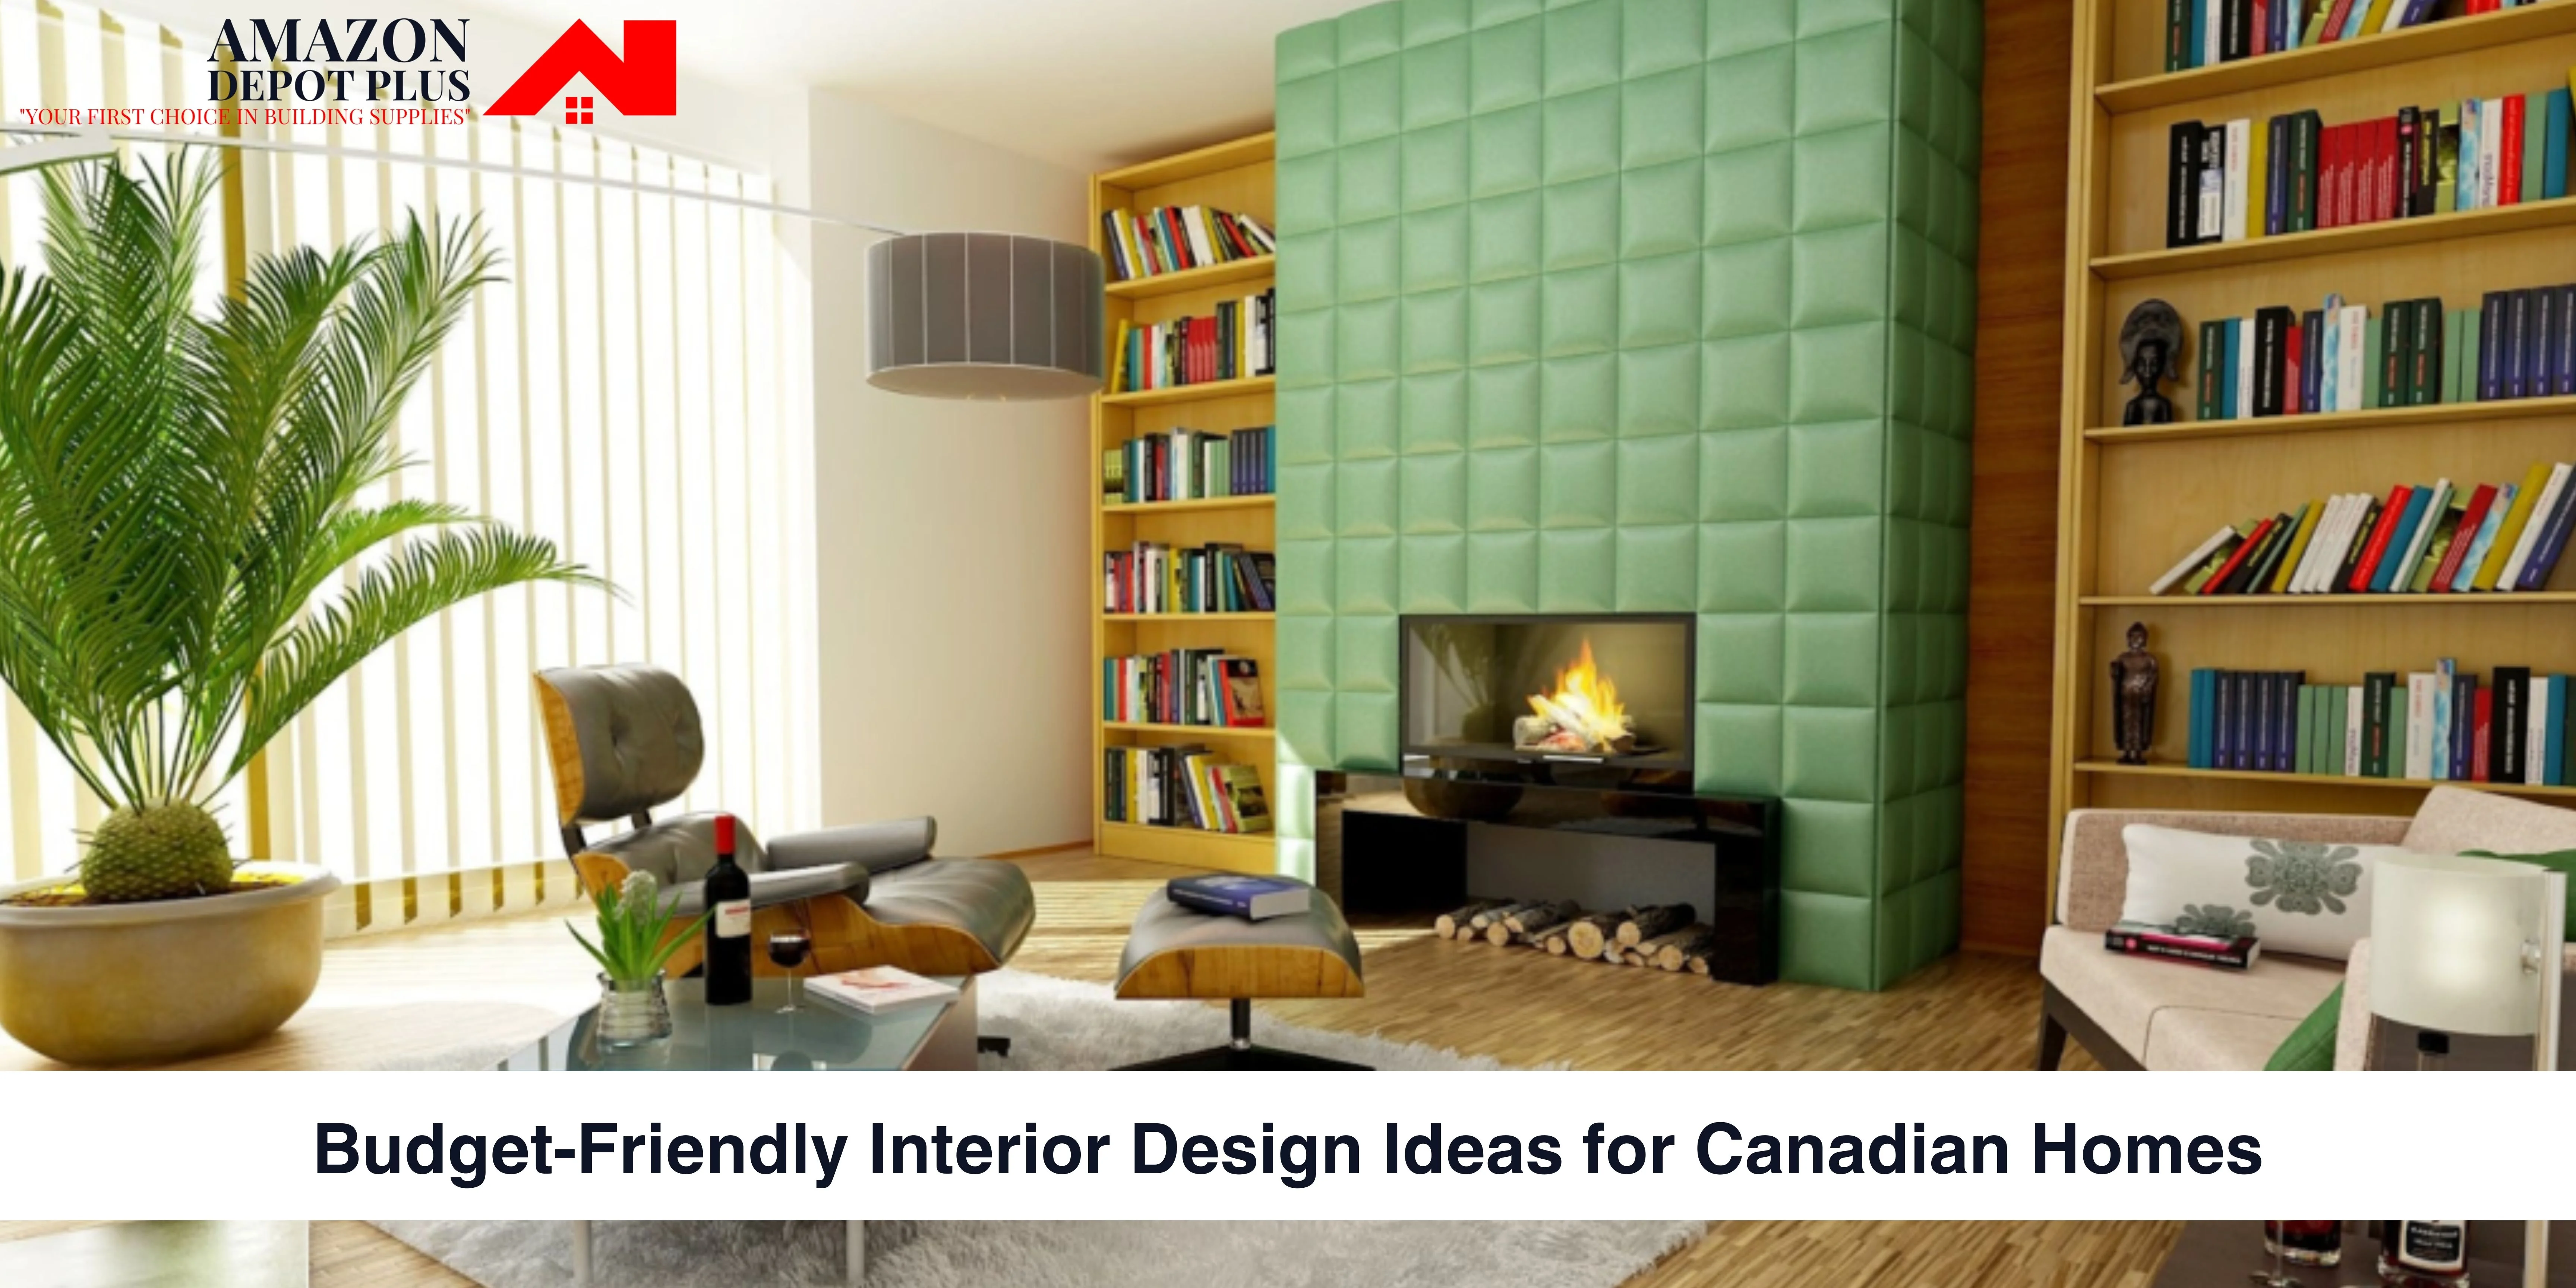 Budget-Friendly Interior Design Ideas for Canadian Homes